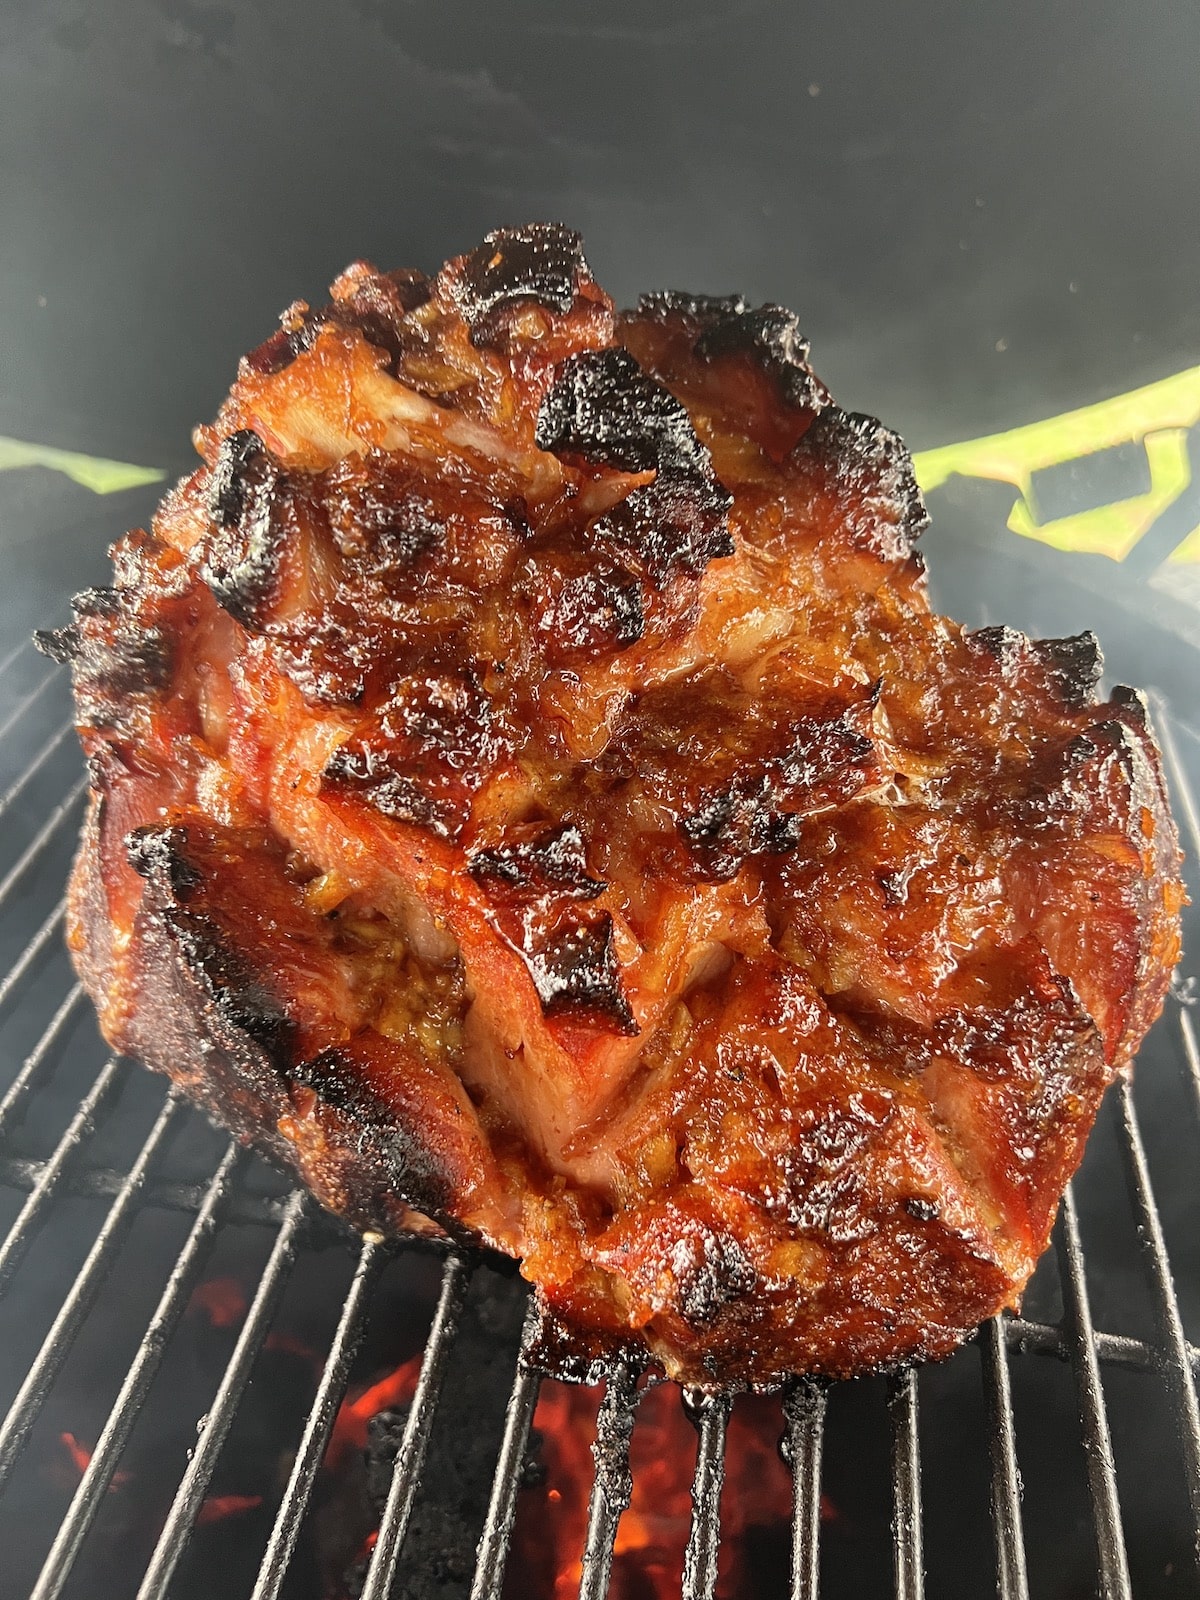 Smoked, glazed ham on a grill.